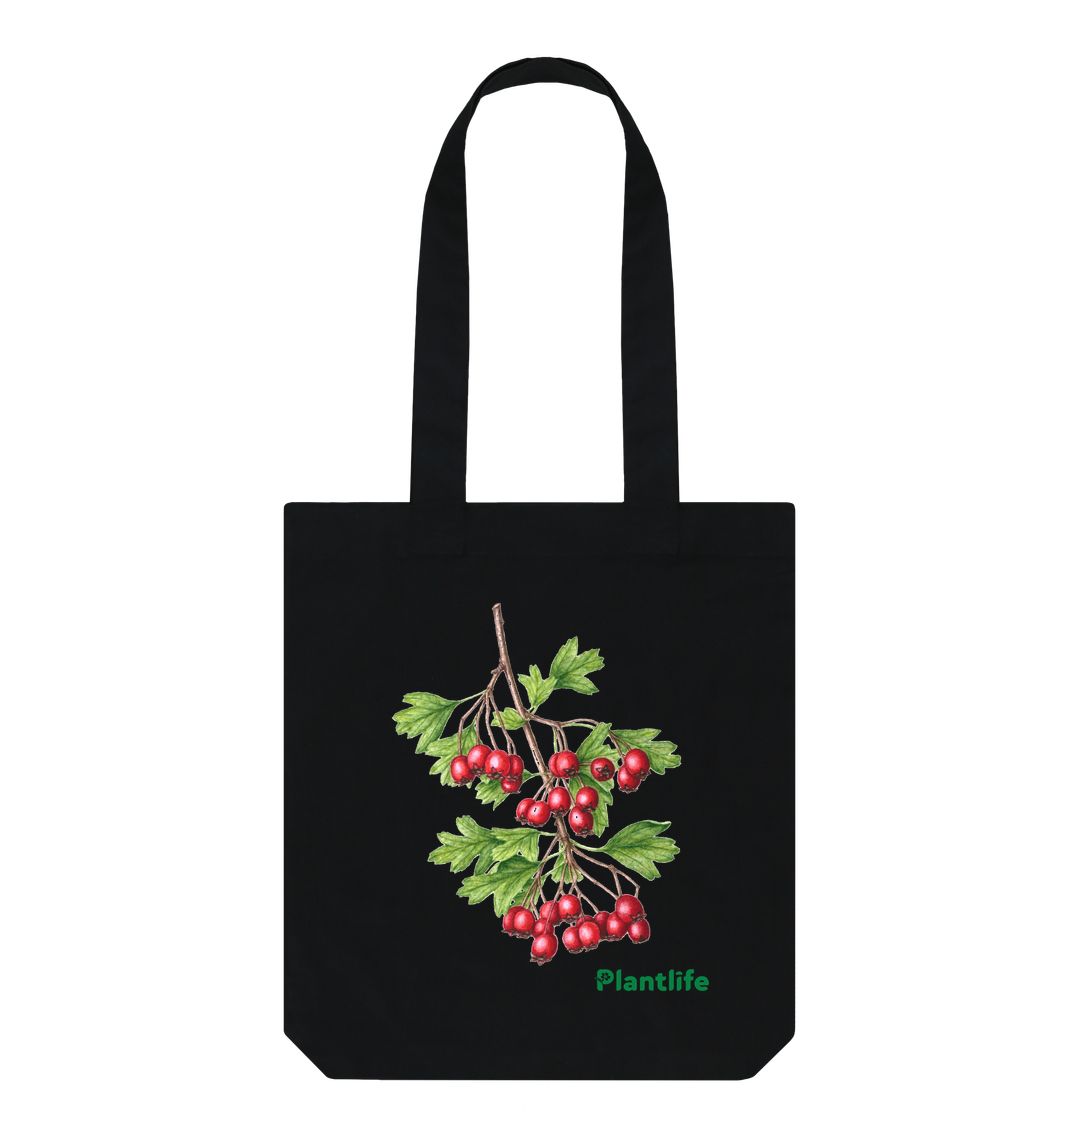 Black Plantlife Design Tote Bag - Crataegus monogyna (Common Hawthorn)